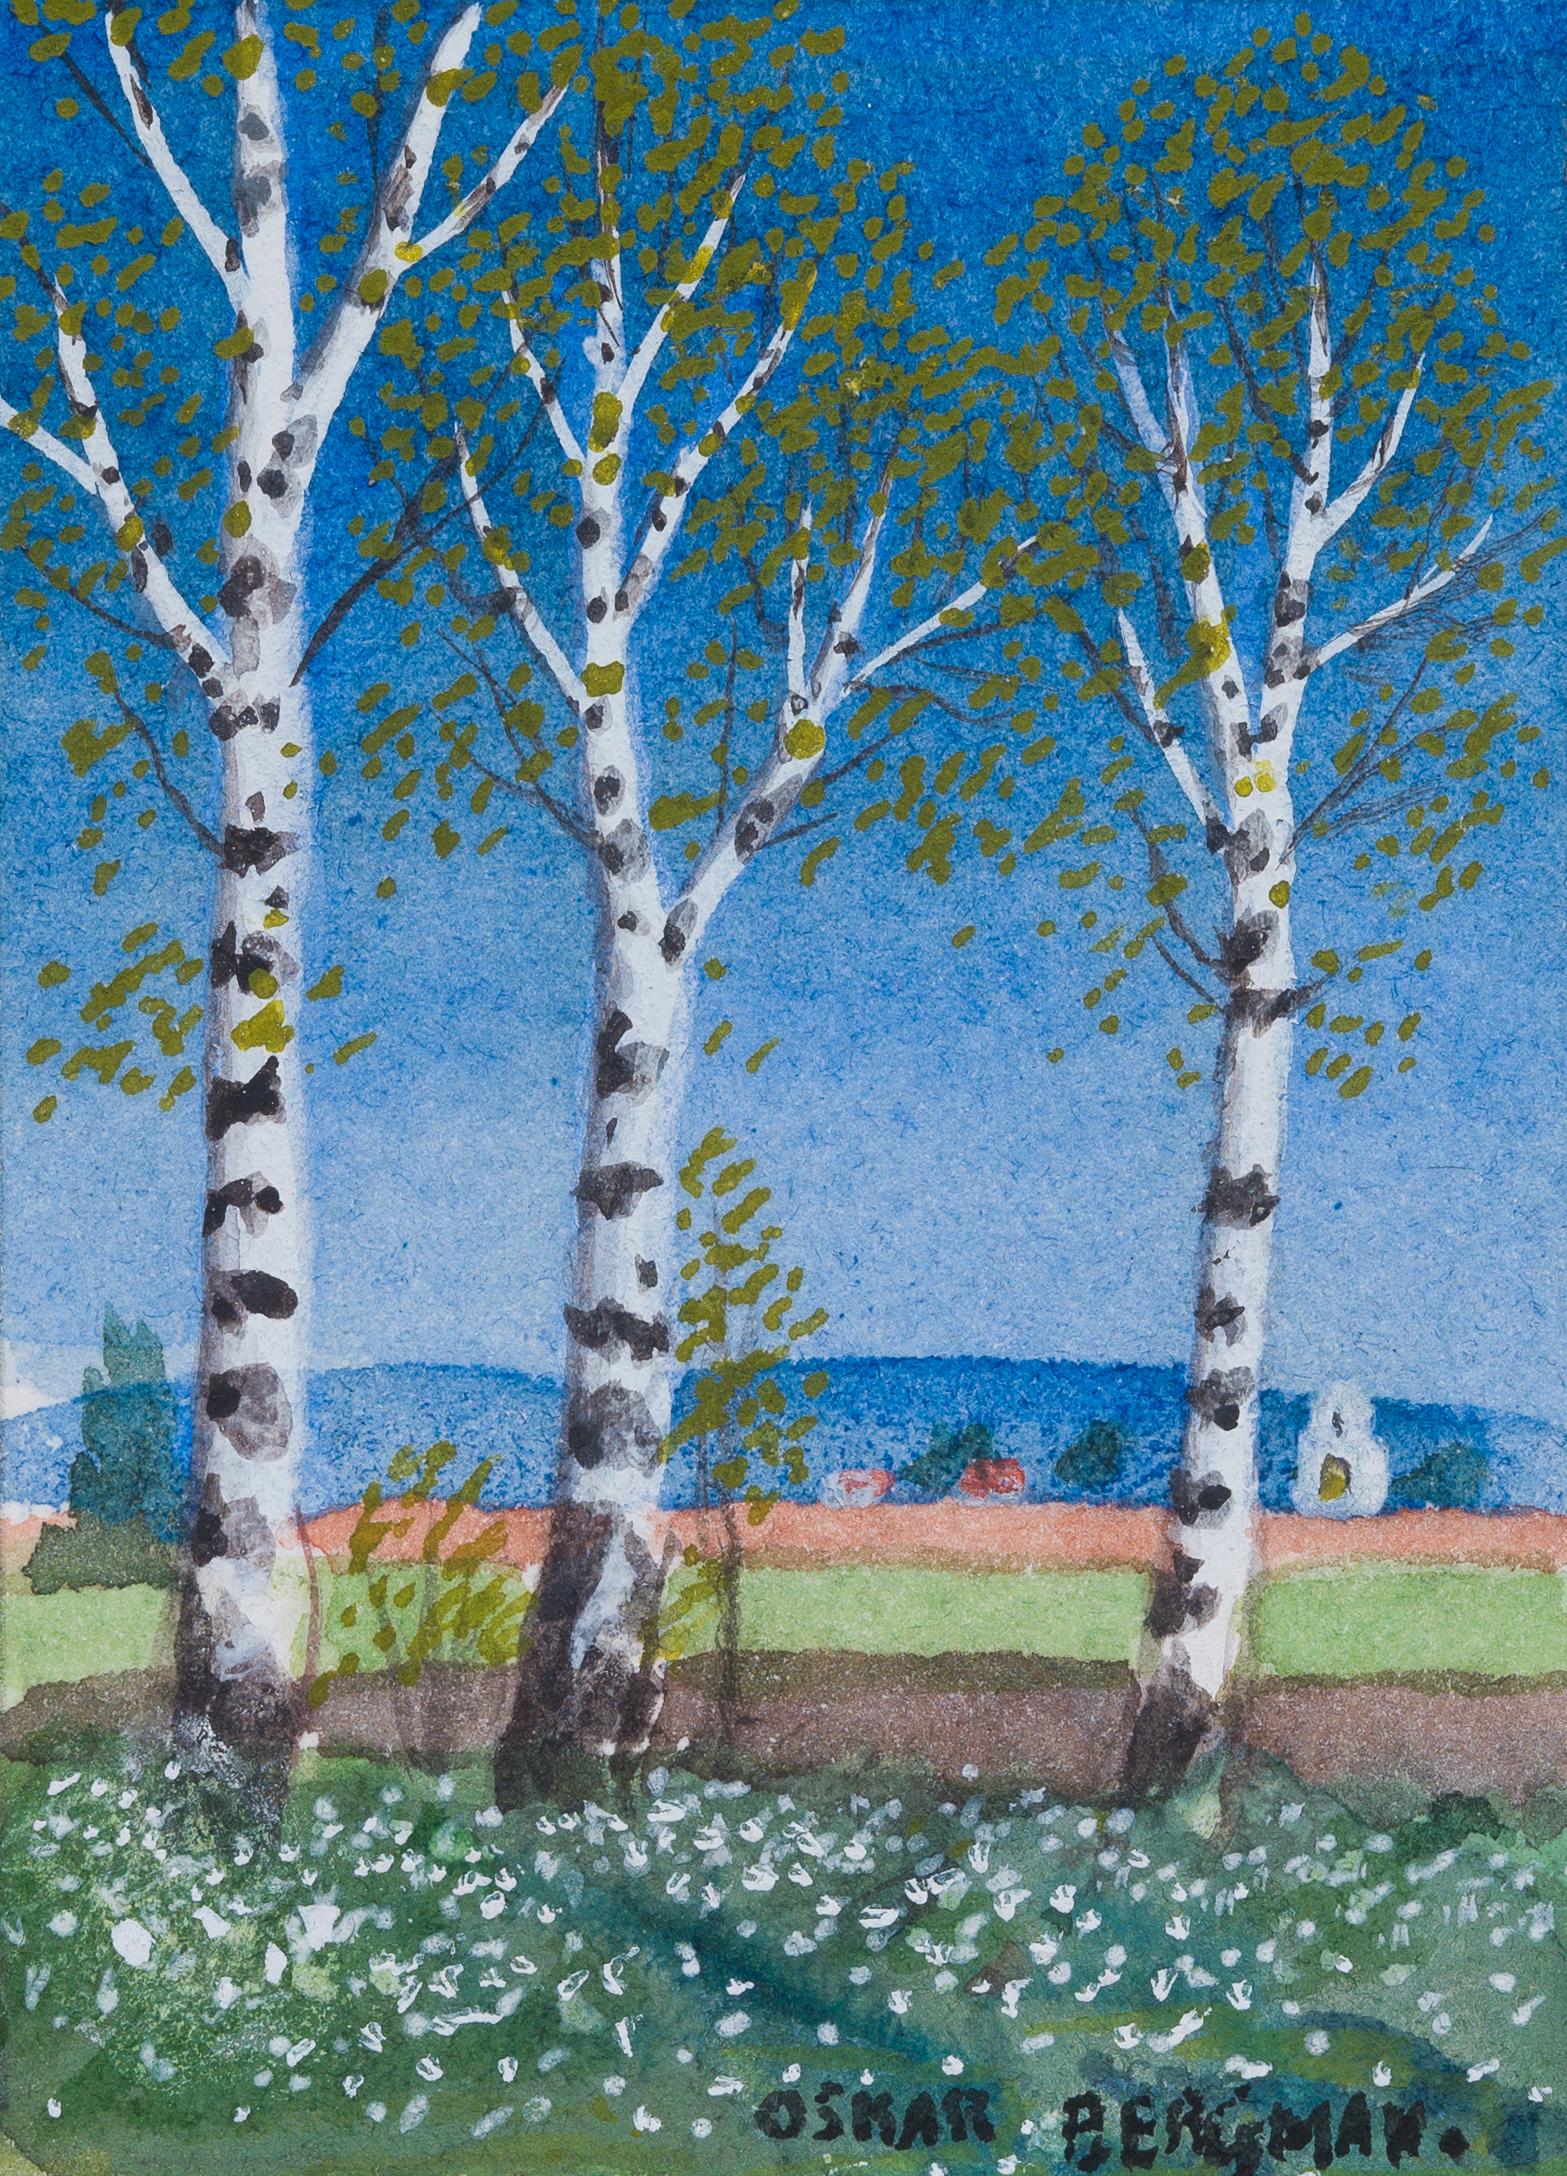 Miniature Watercolor Called Plains Landscape By Swedish Artist Oskar Bergman 2